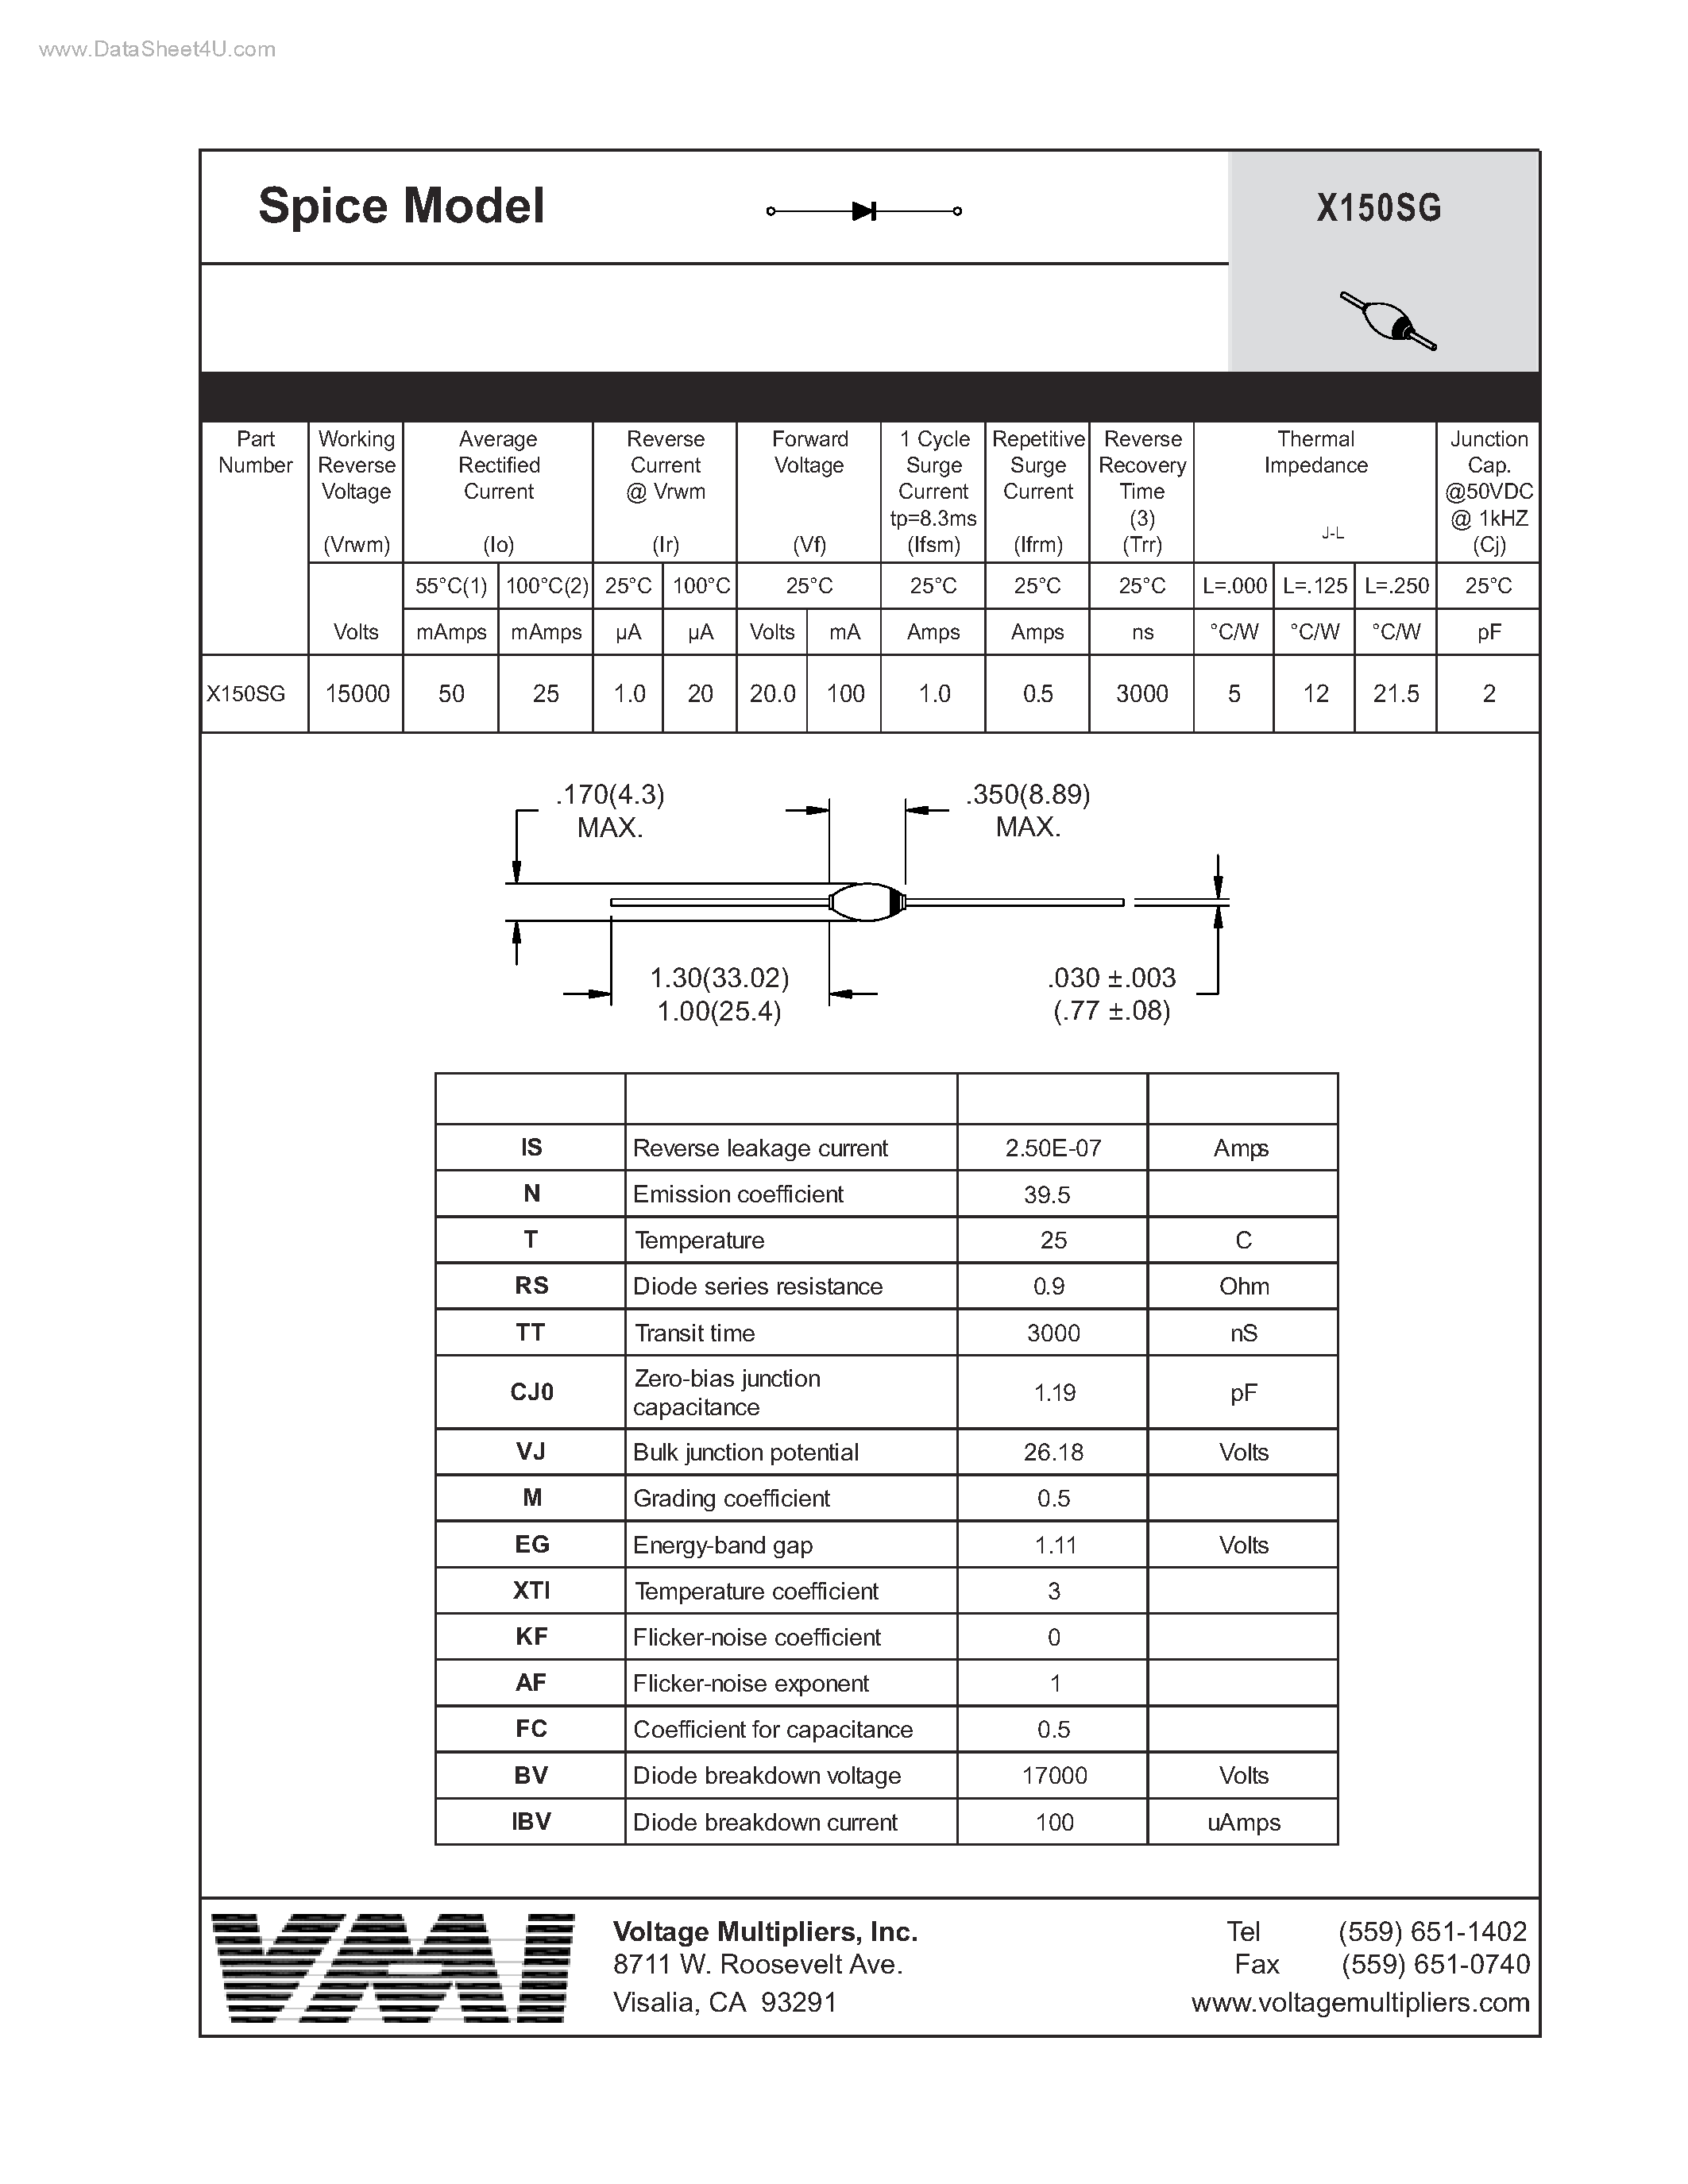 Datasheet X150SG - Spice Model page 1